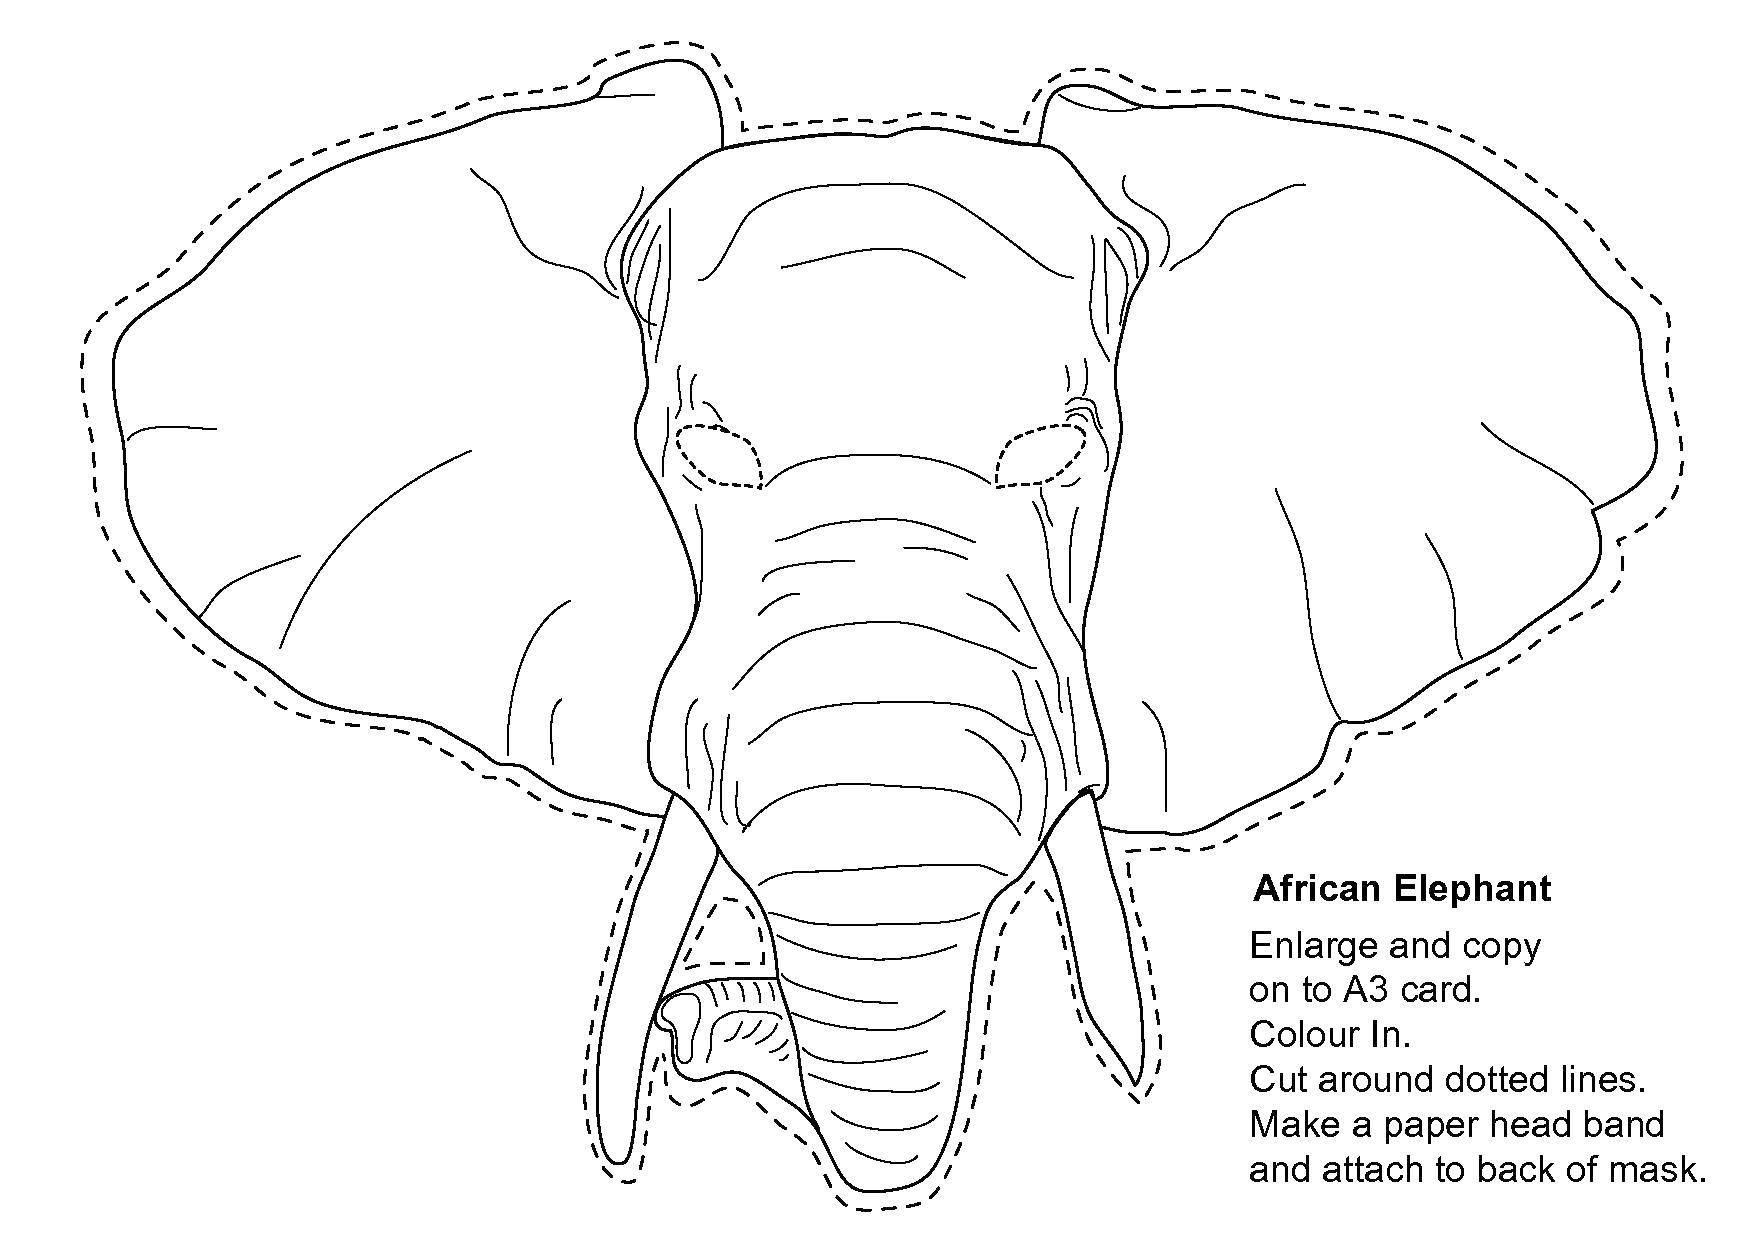 Coloring Mask large elephant. Category the contours of the elephant to cut. Tags:  The elephant outline, .